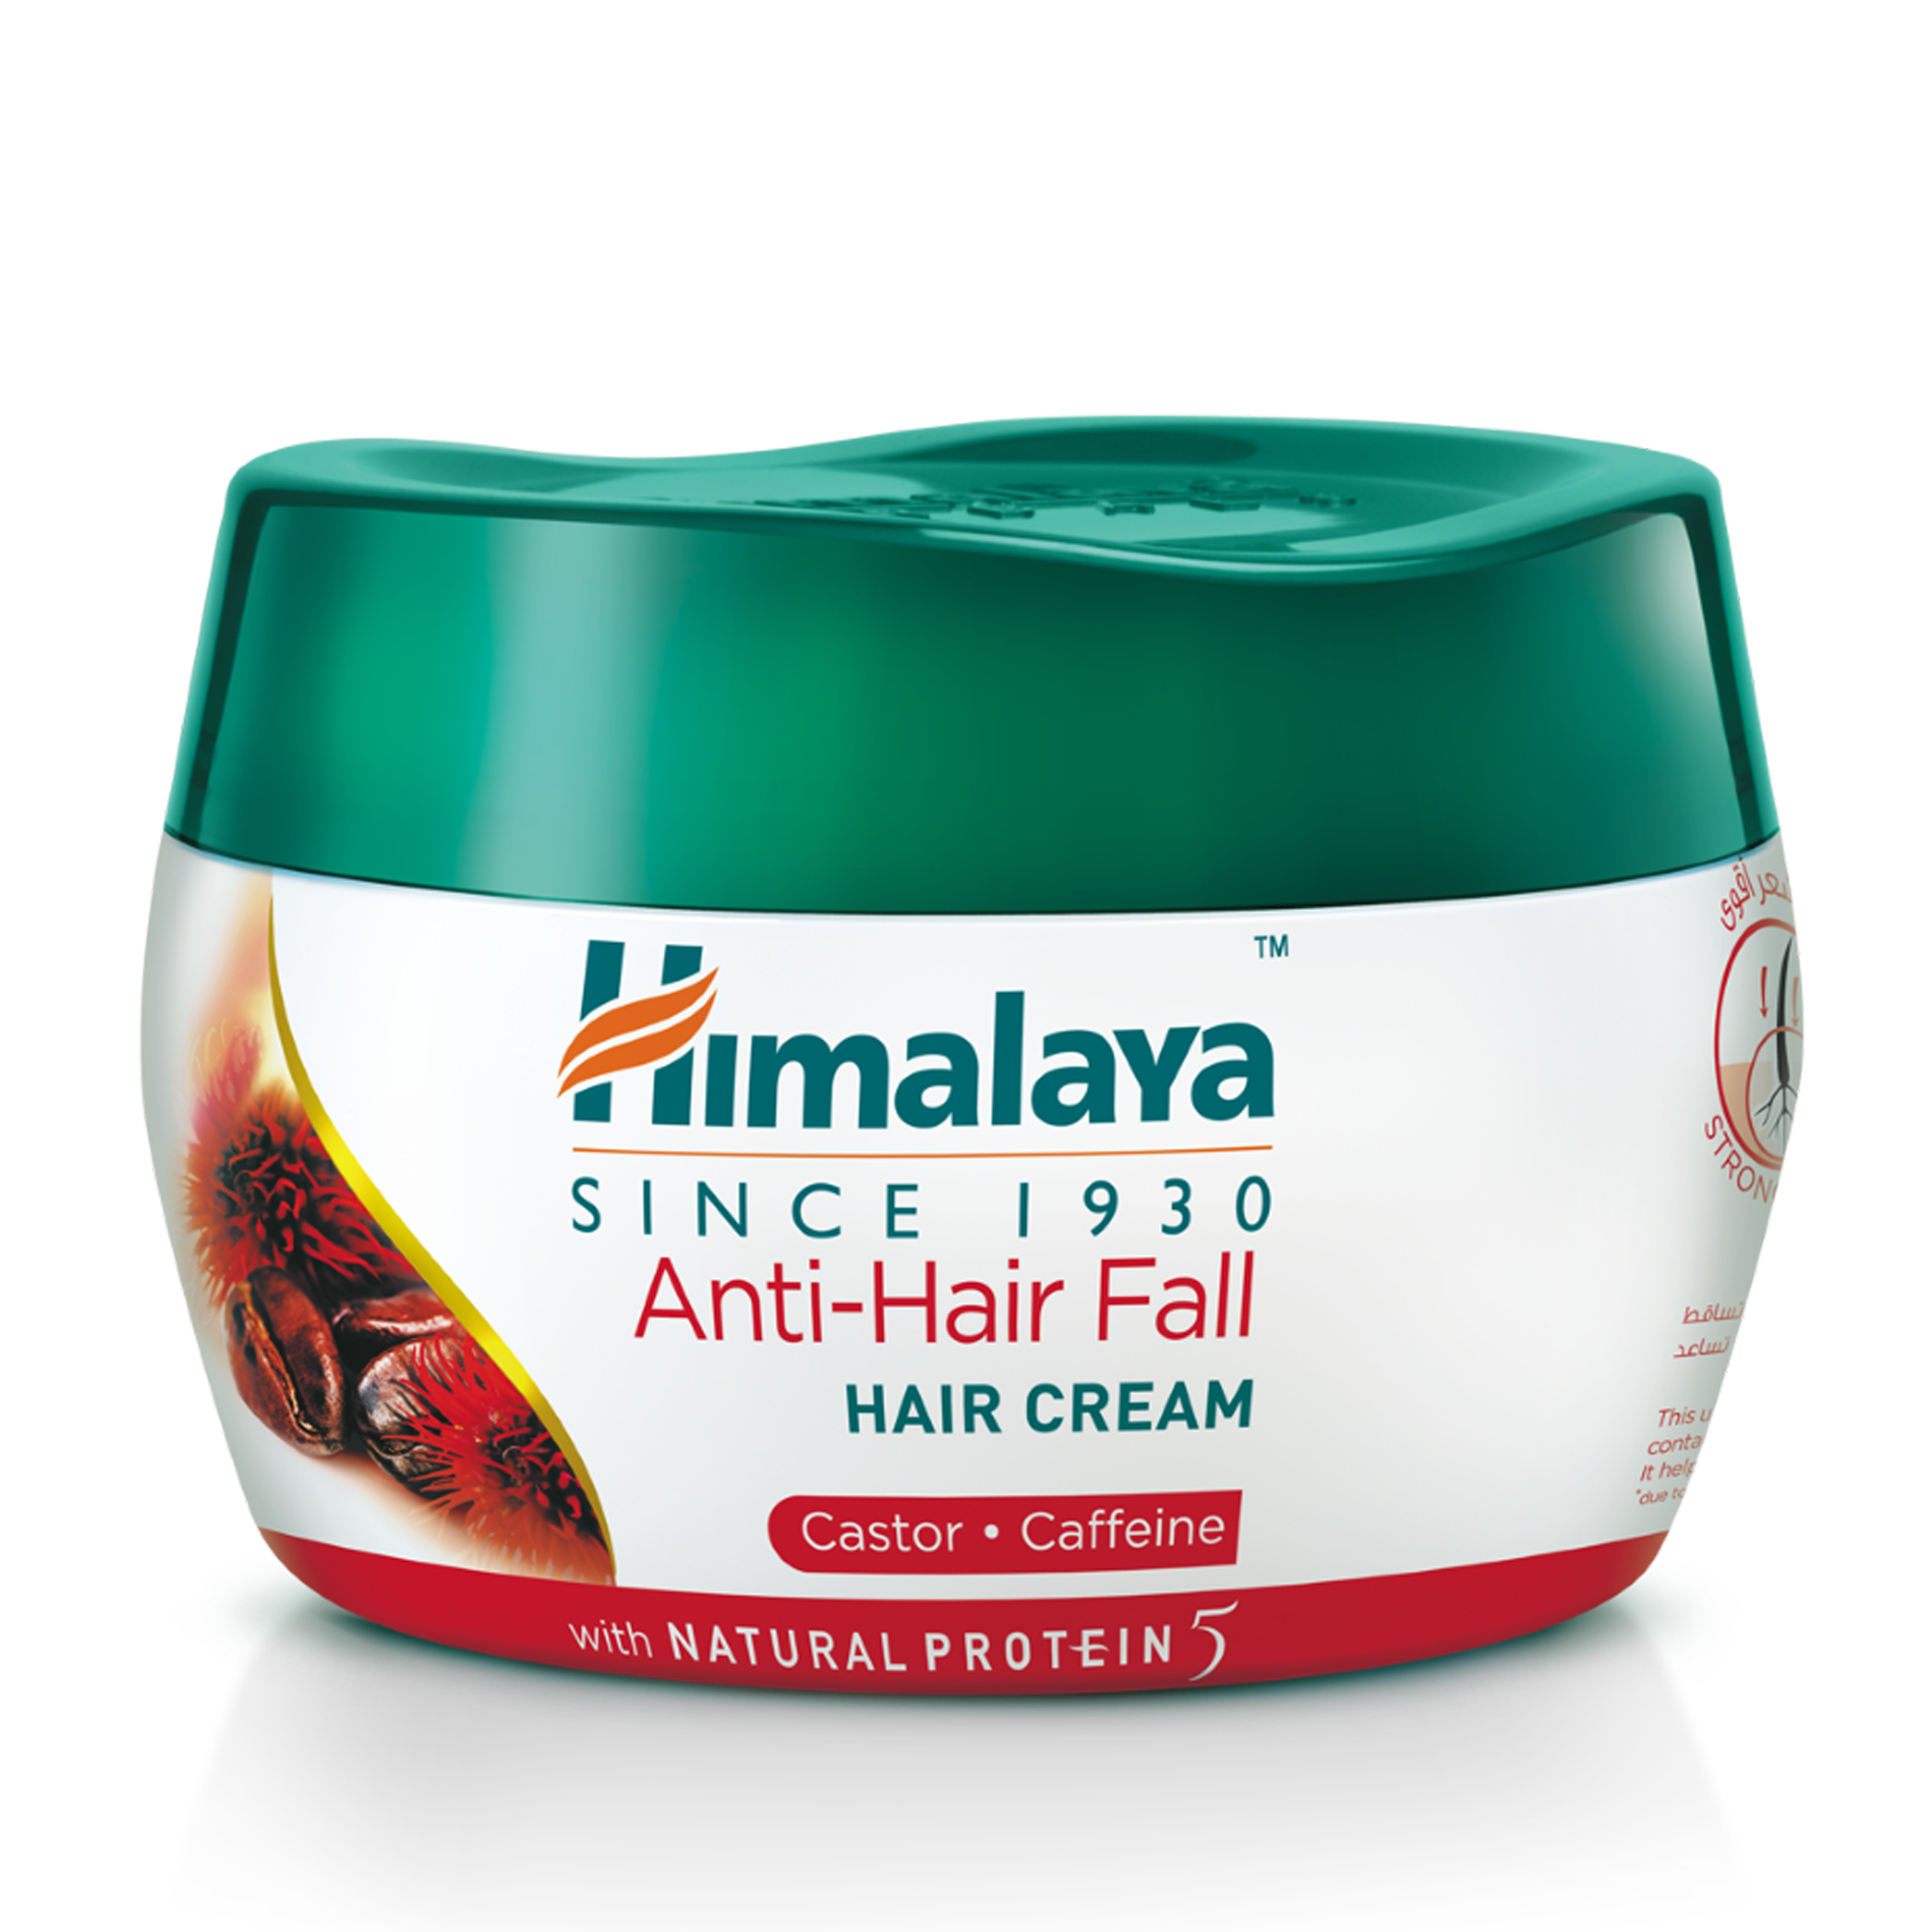 Himalaya Anti-Hair Fall Hair Cream 140ml - Reduces Hair fall